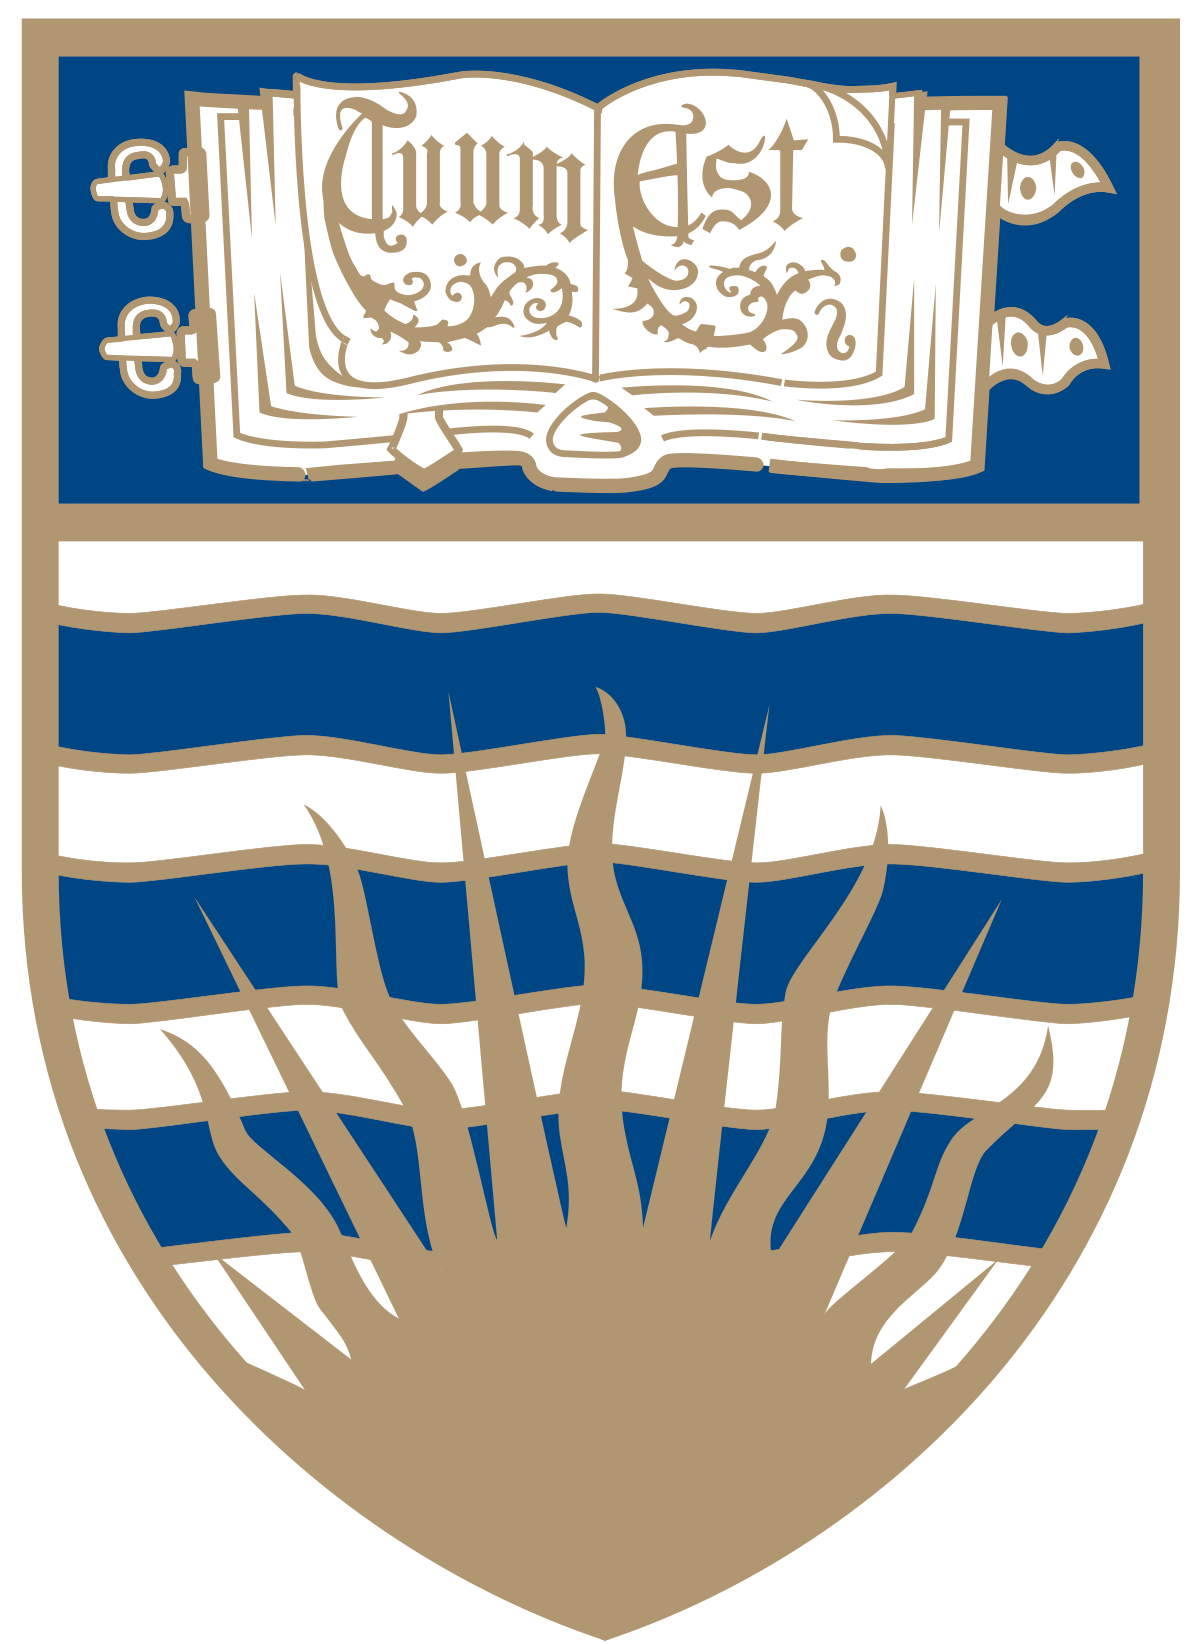 British-Columbia-logo